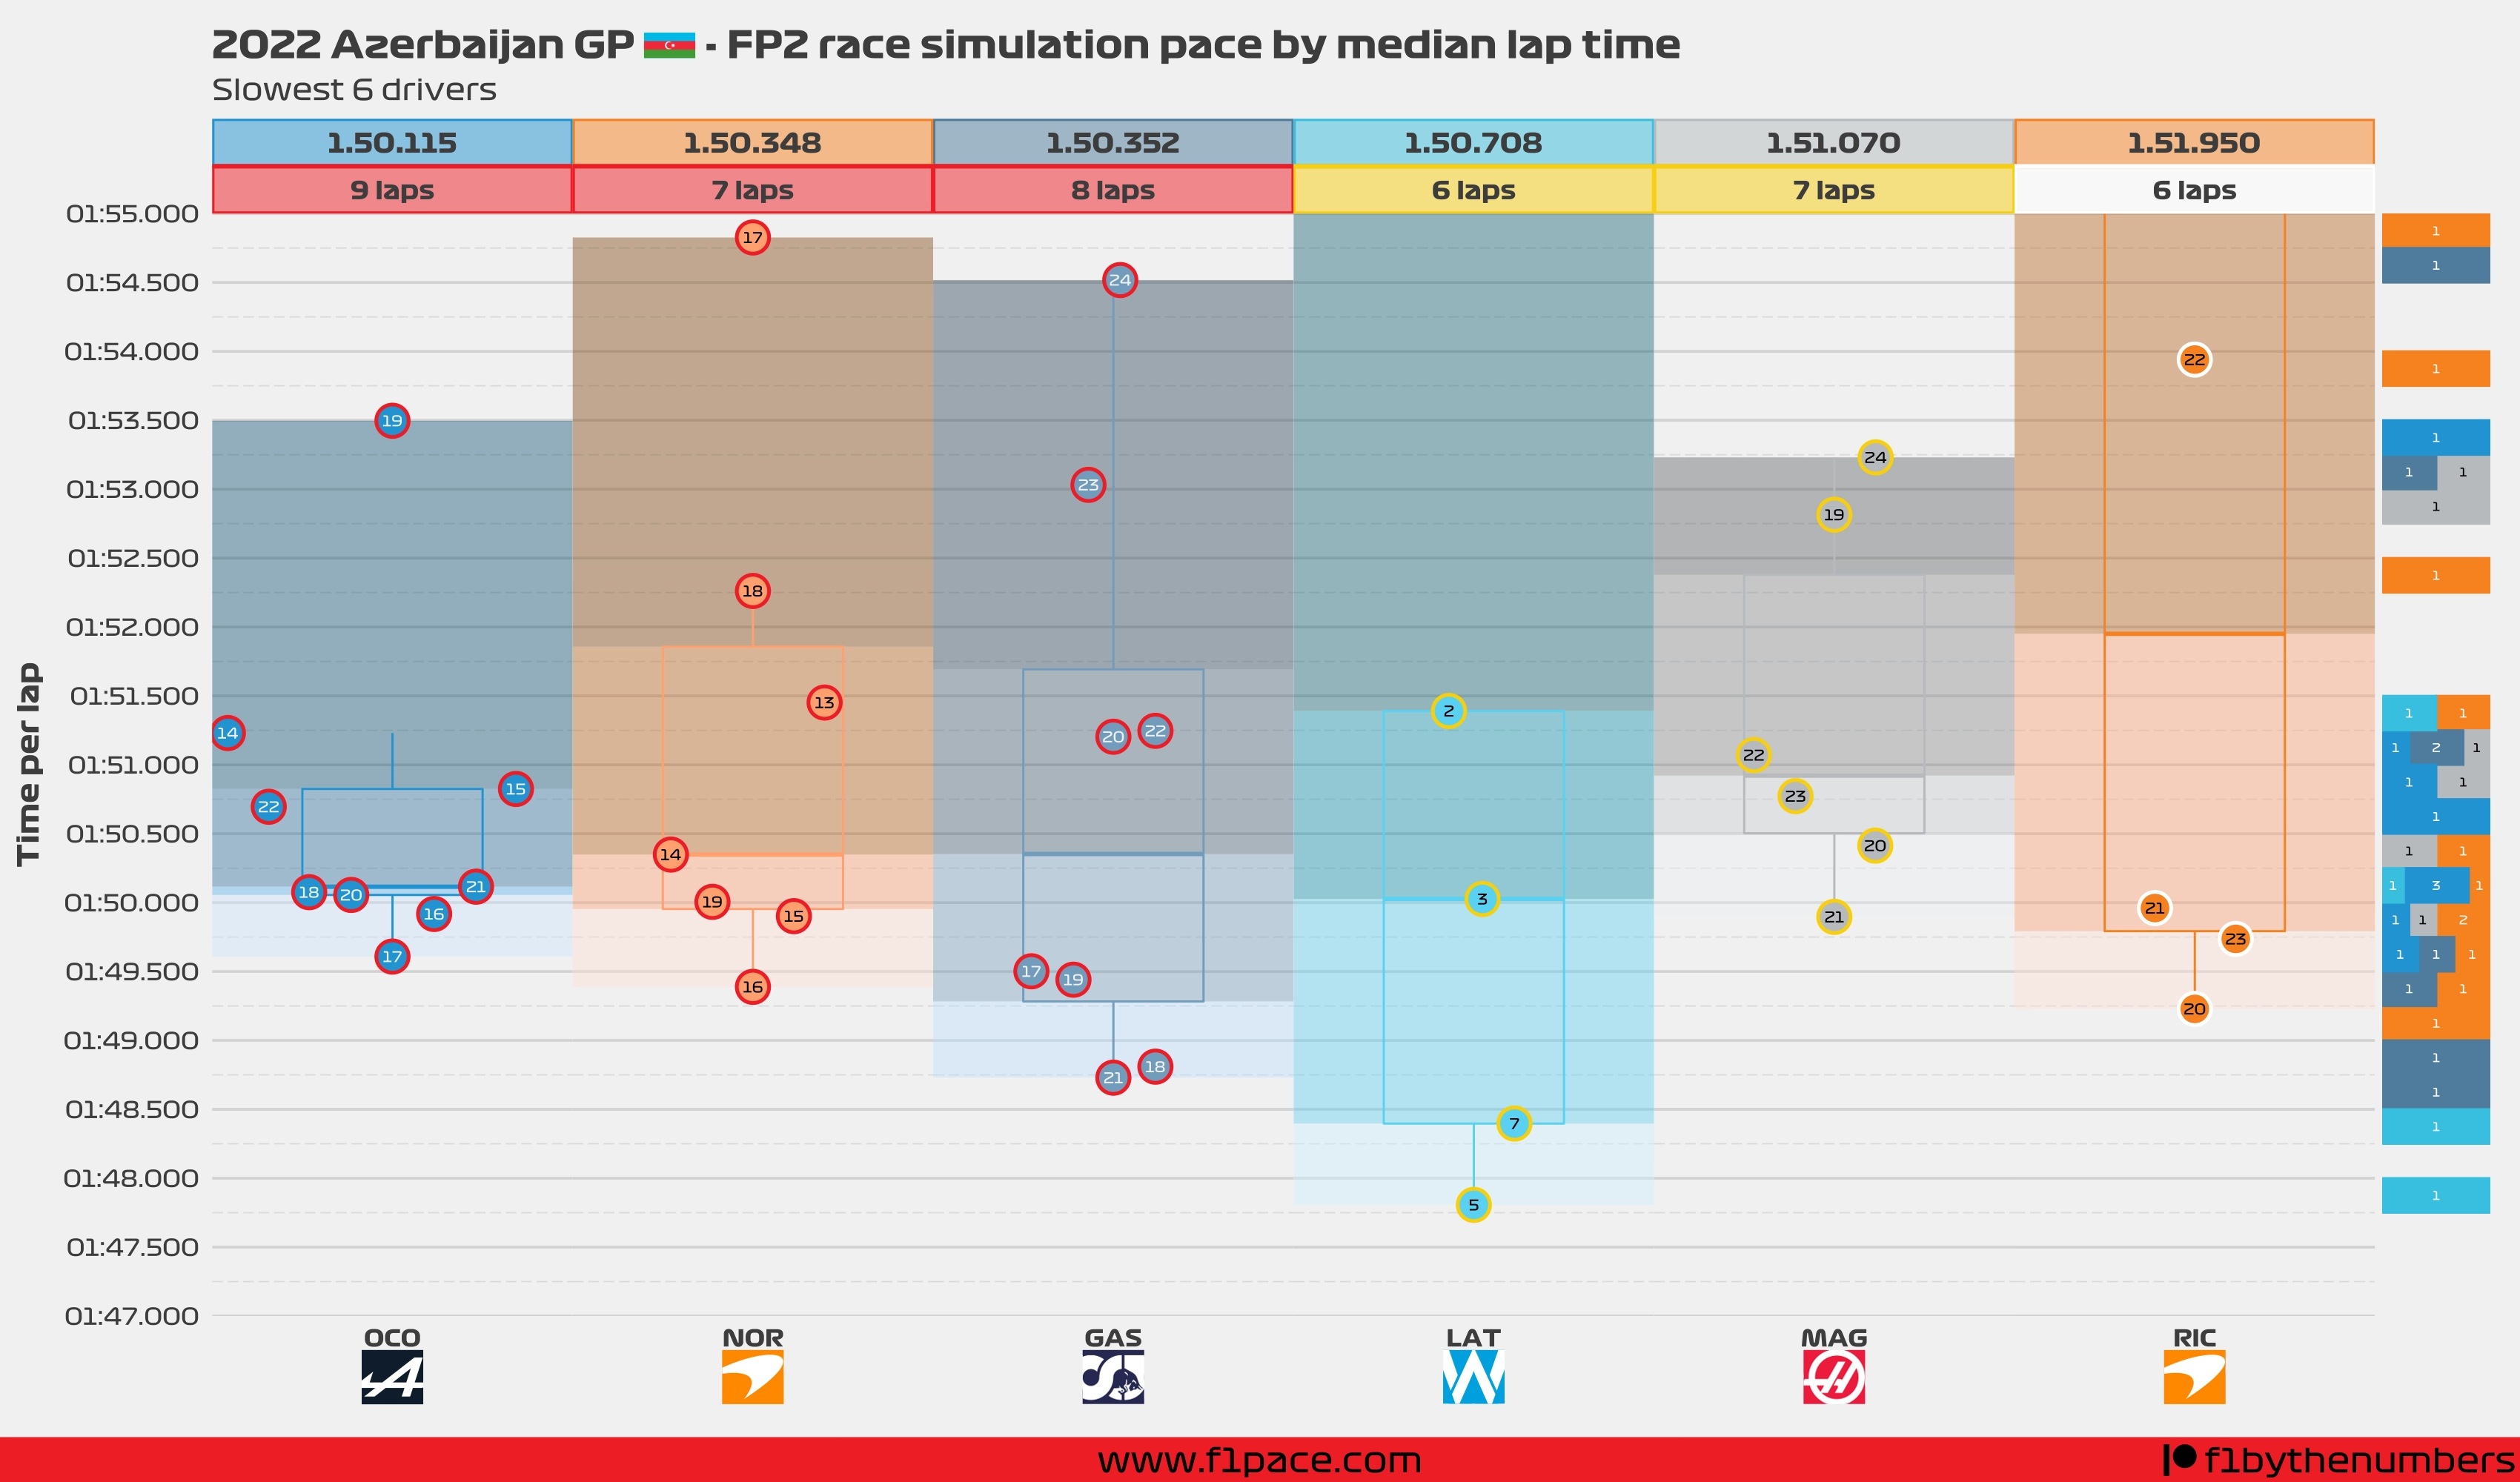 Race simulation pace: Bottom 6 drivers